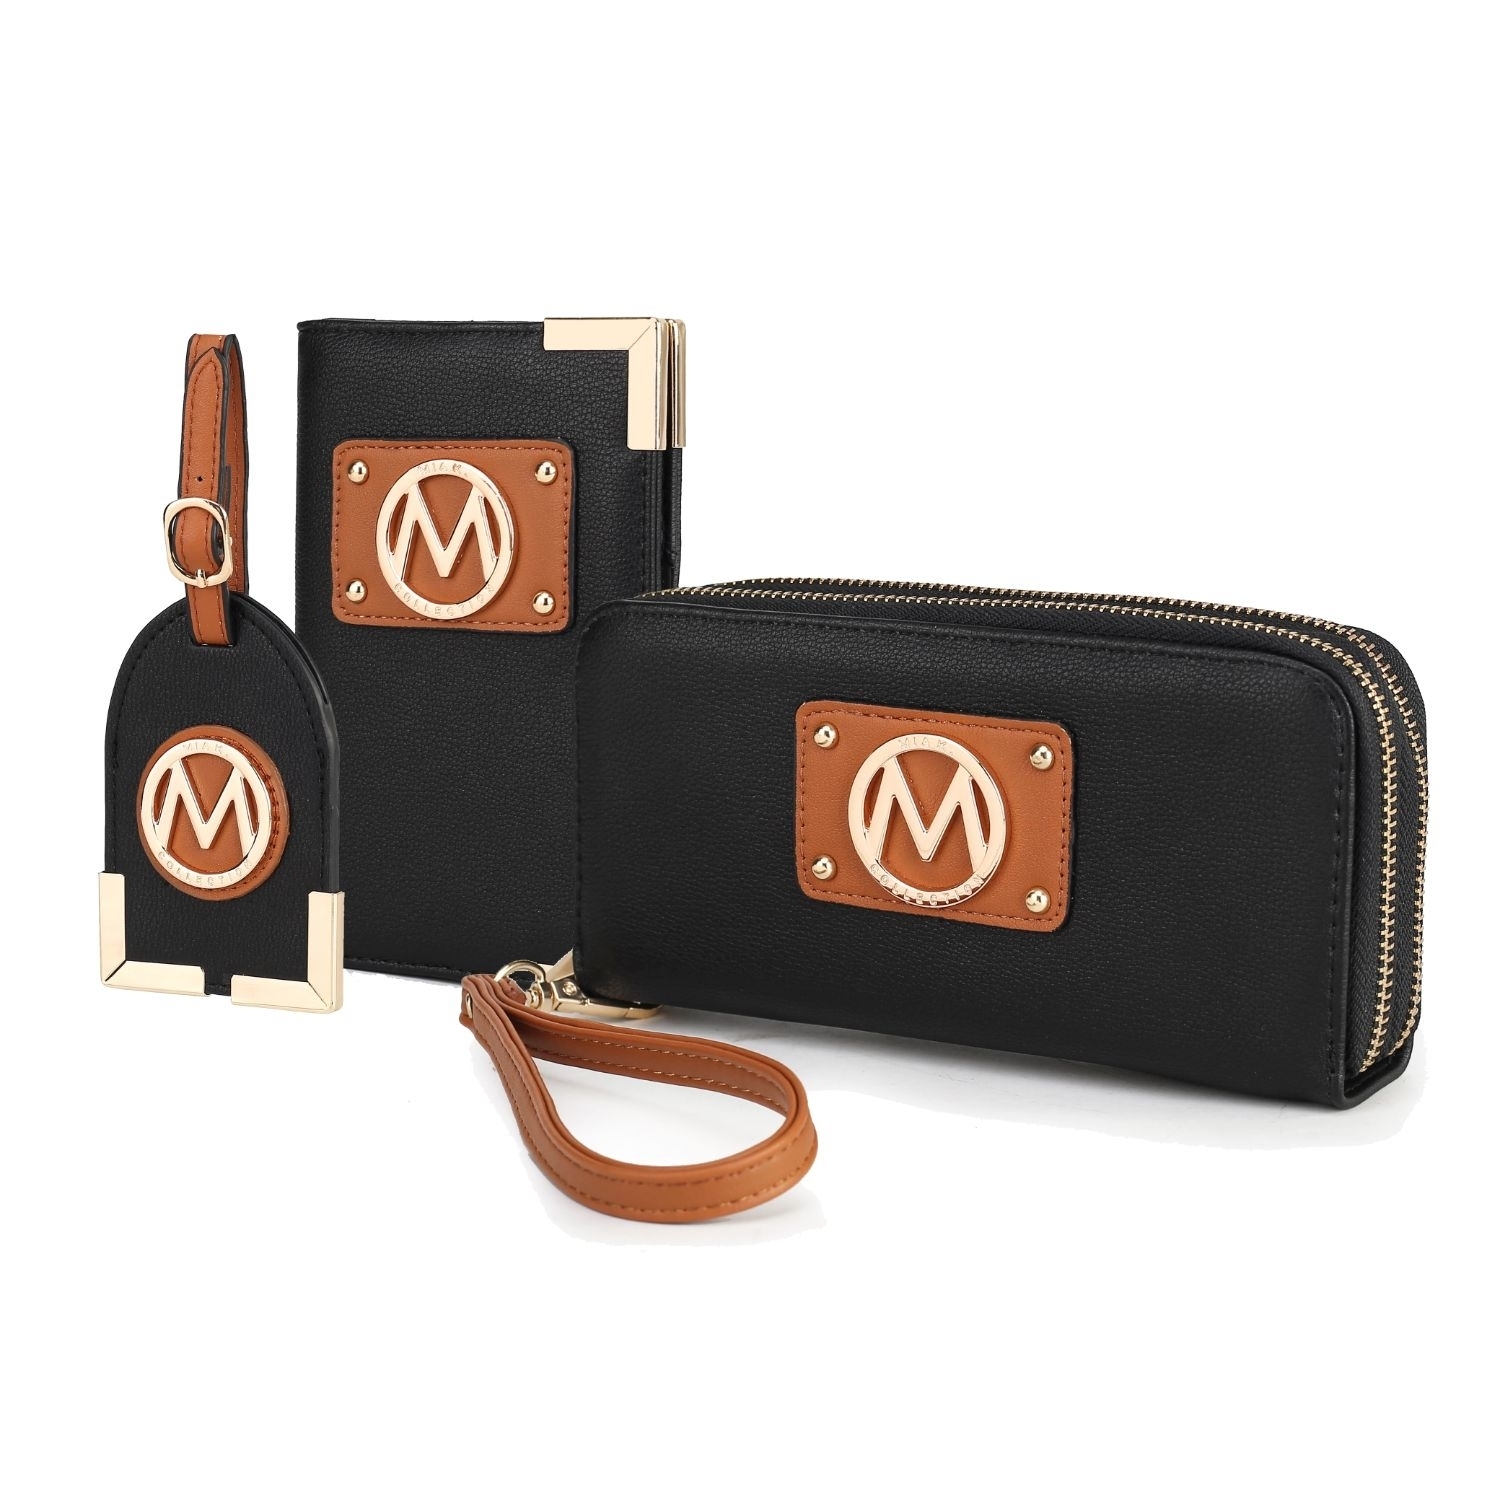 MKF Collection Darla Travel Gift Set Handbag By Mia K 3 Pieces - Black